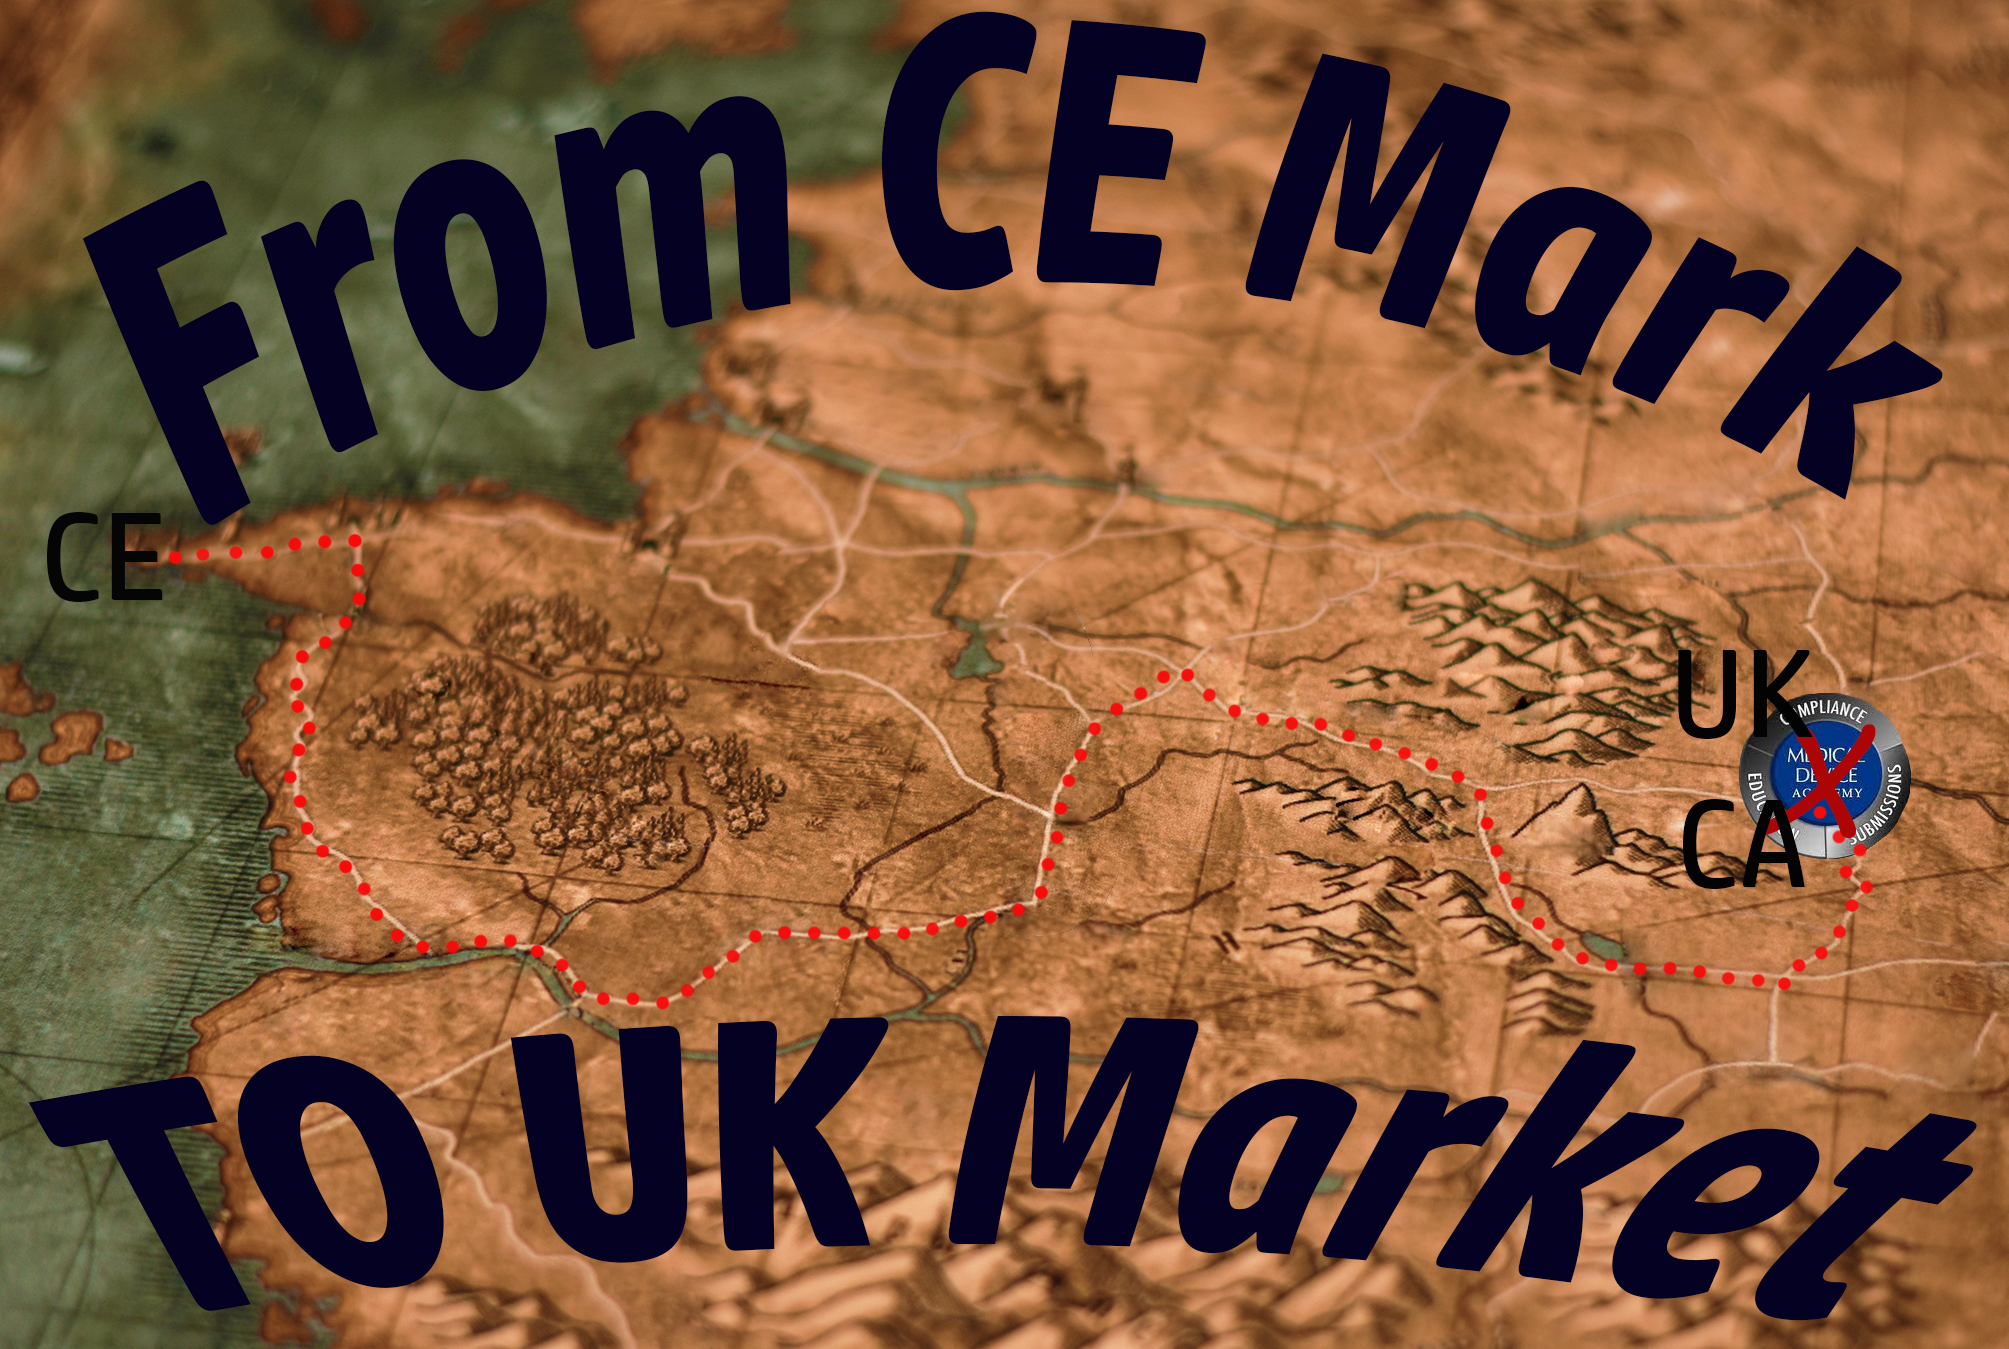 CE to UKCA Thumbnail From CE Mark to UK Market